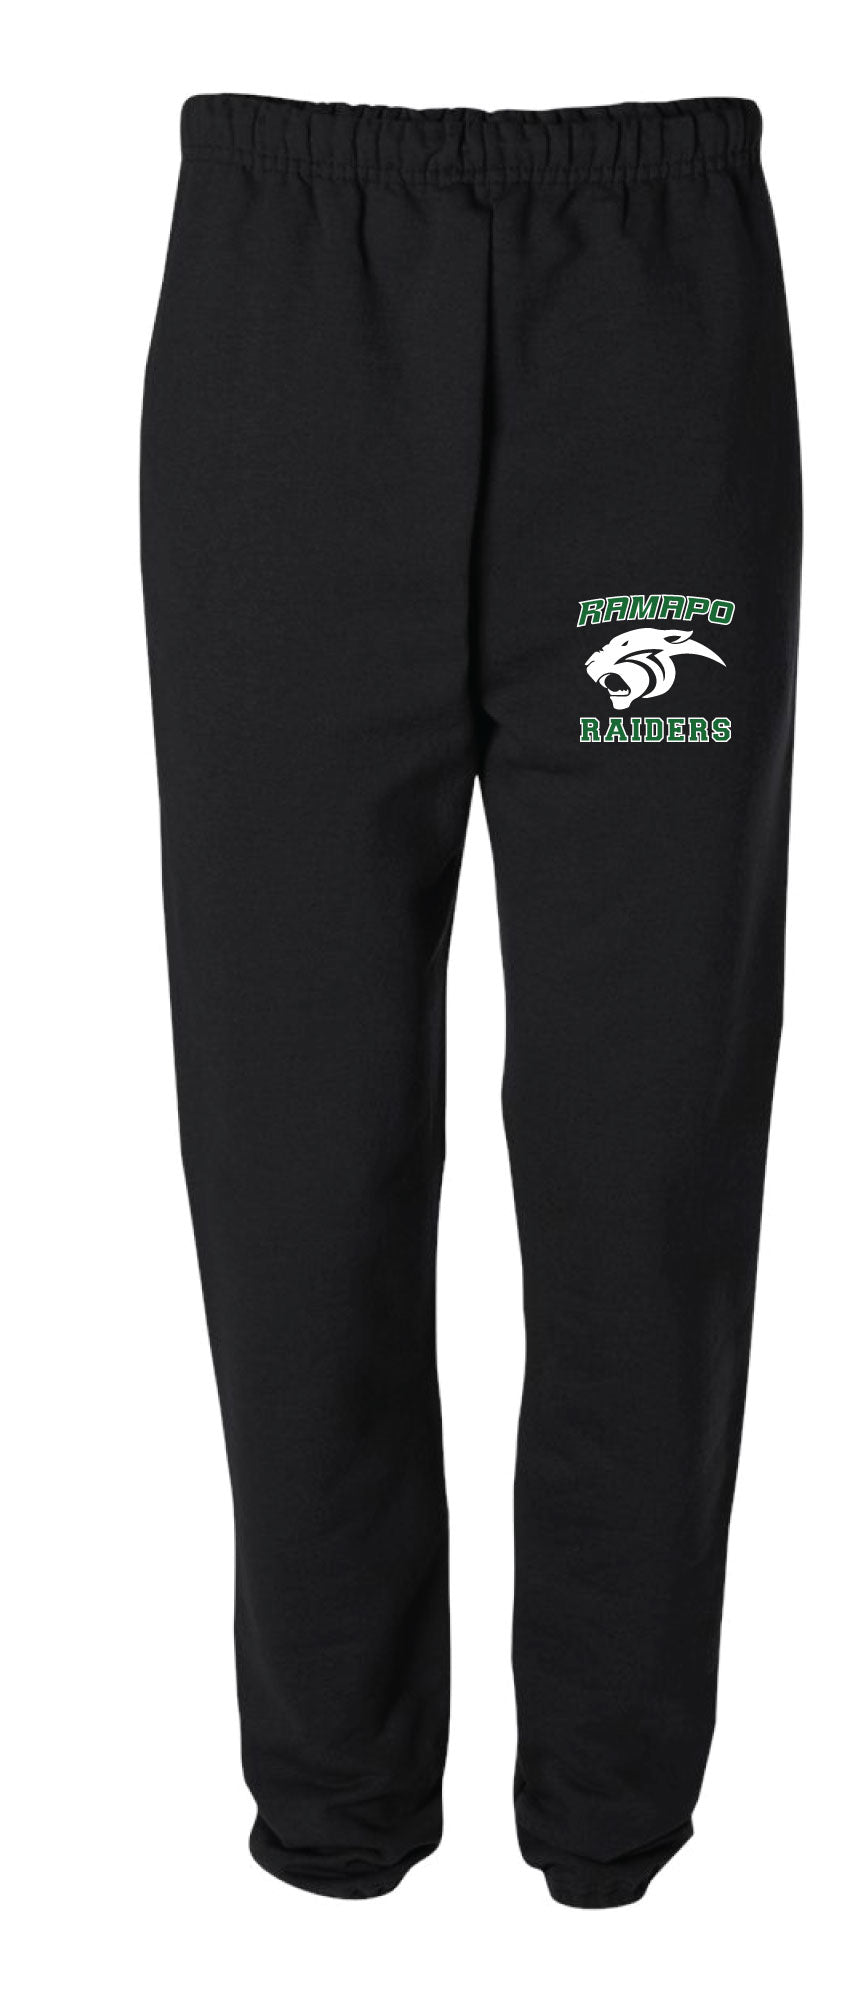 Ramapo Raiders Cotton Sweatpants - Black - 5KounT2018